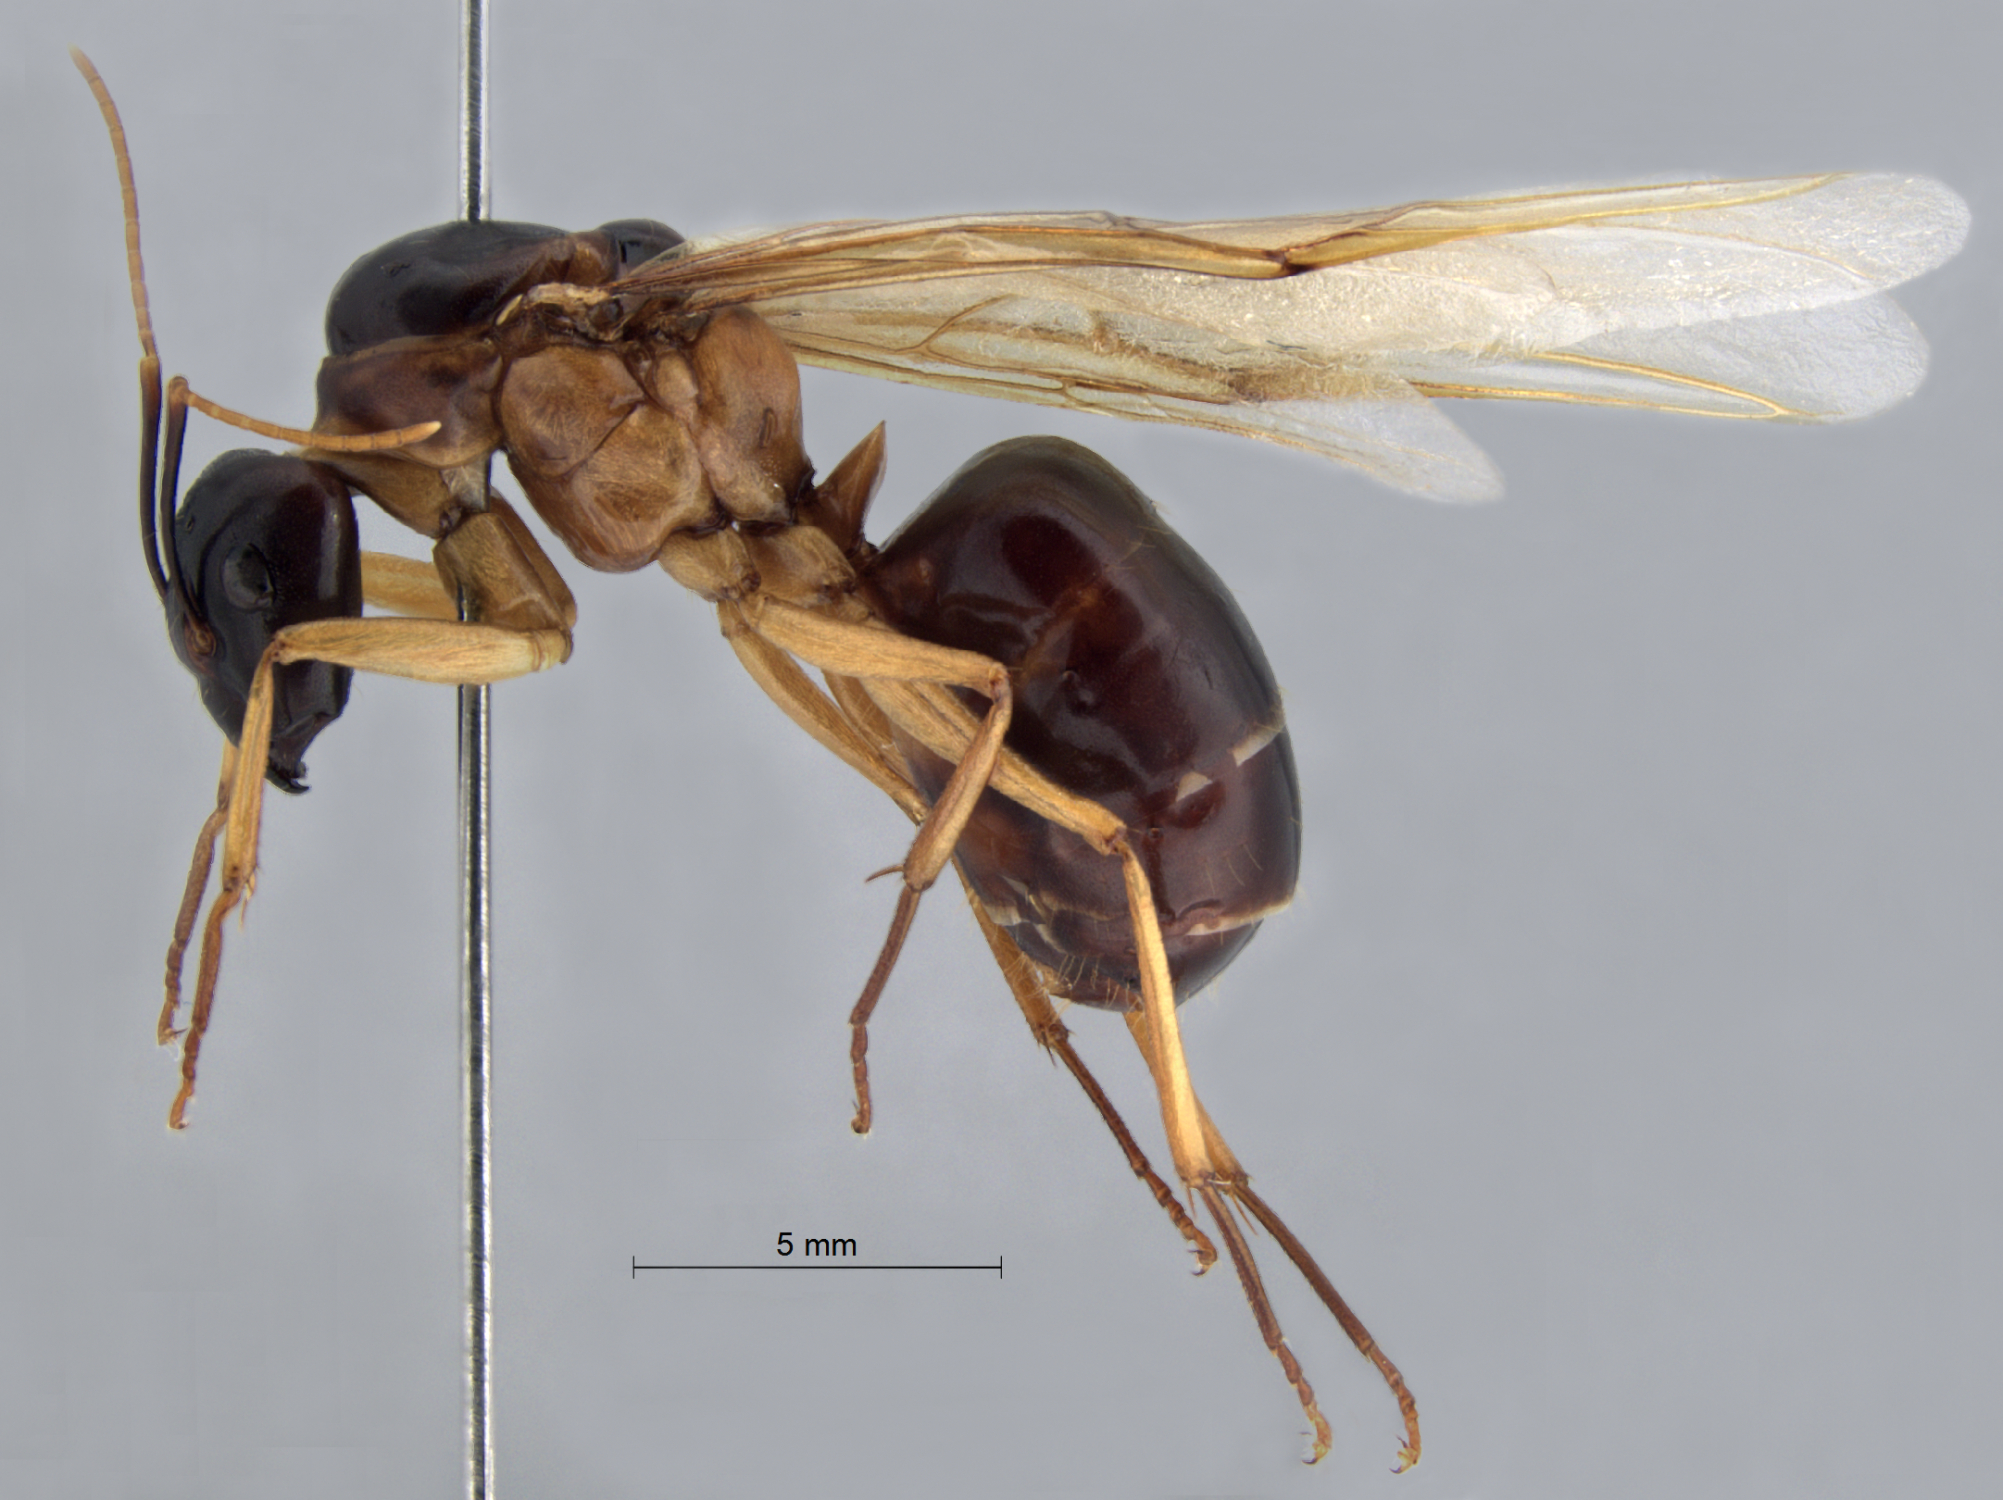  Camponotus arrogans alate lateral